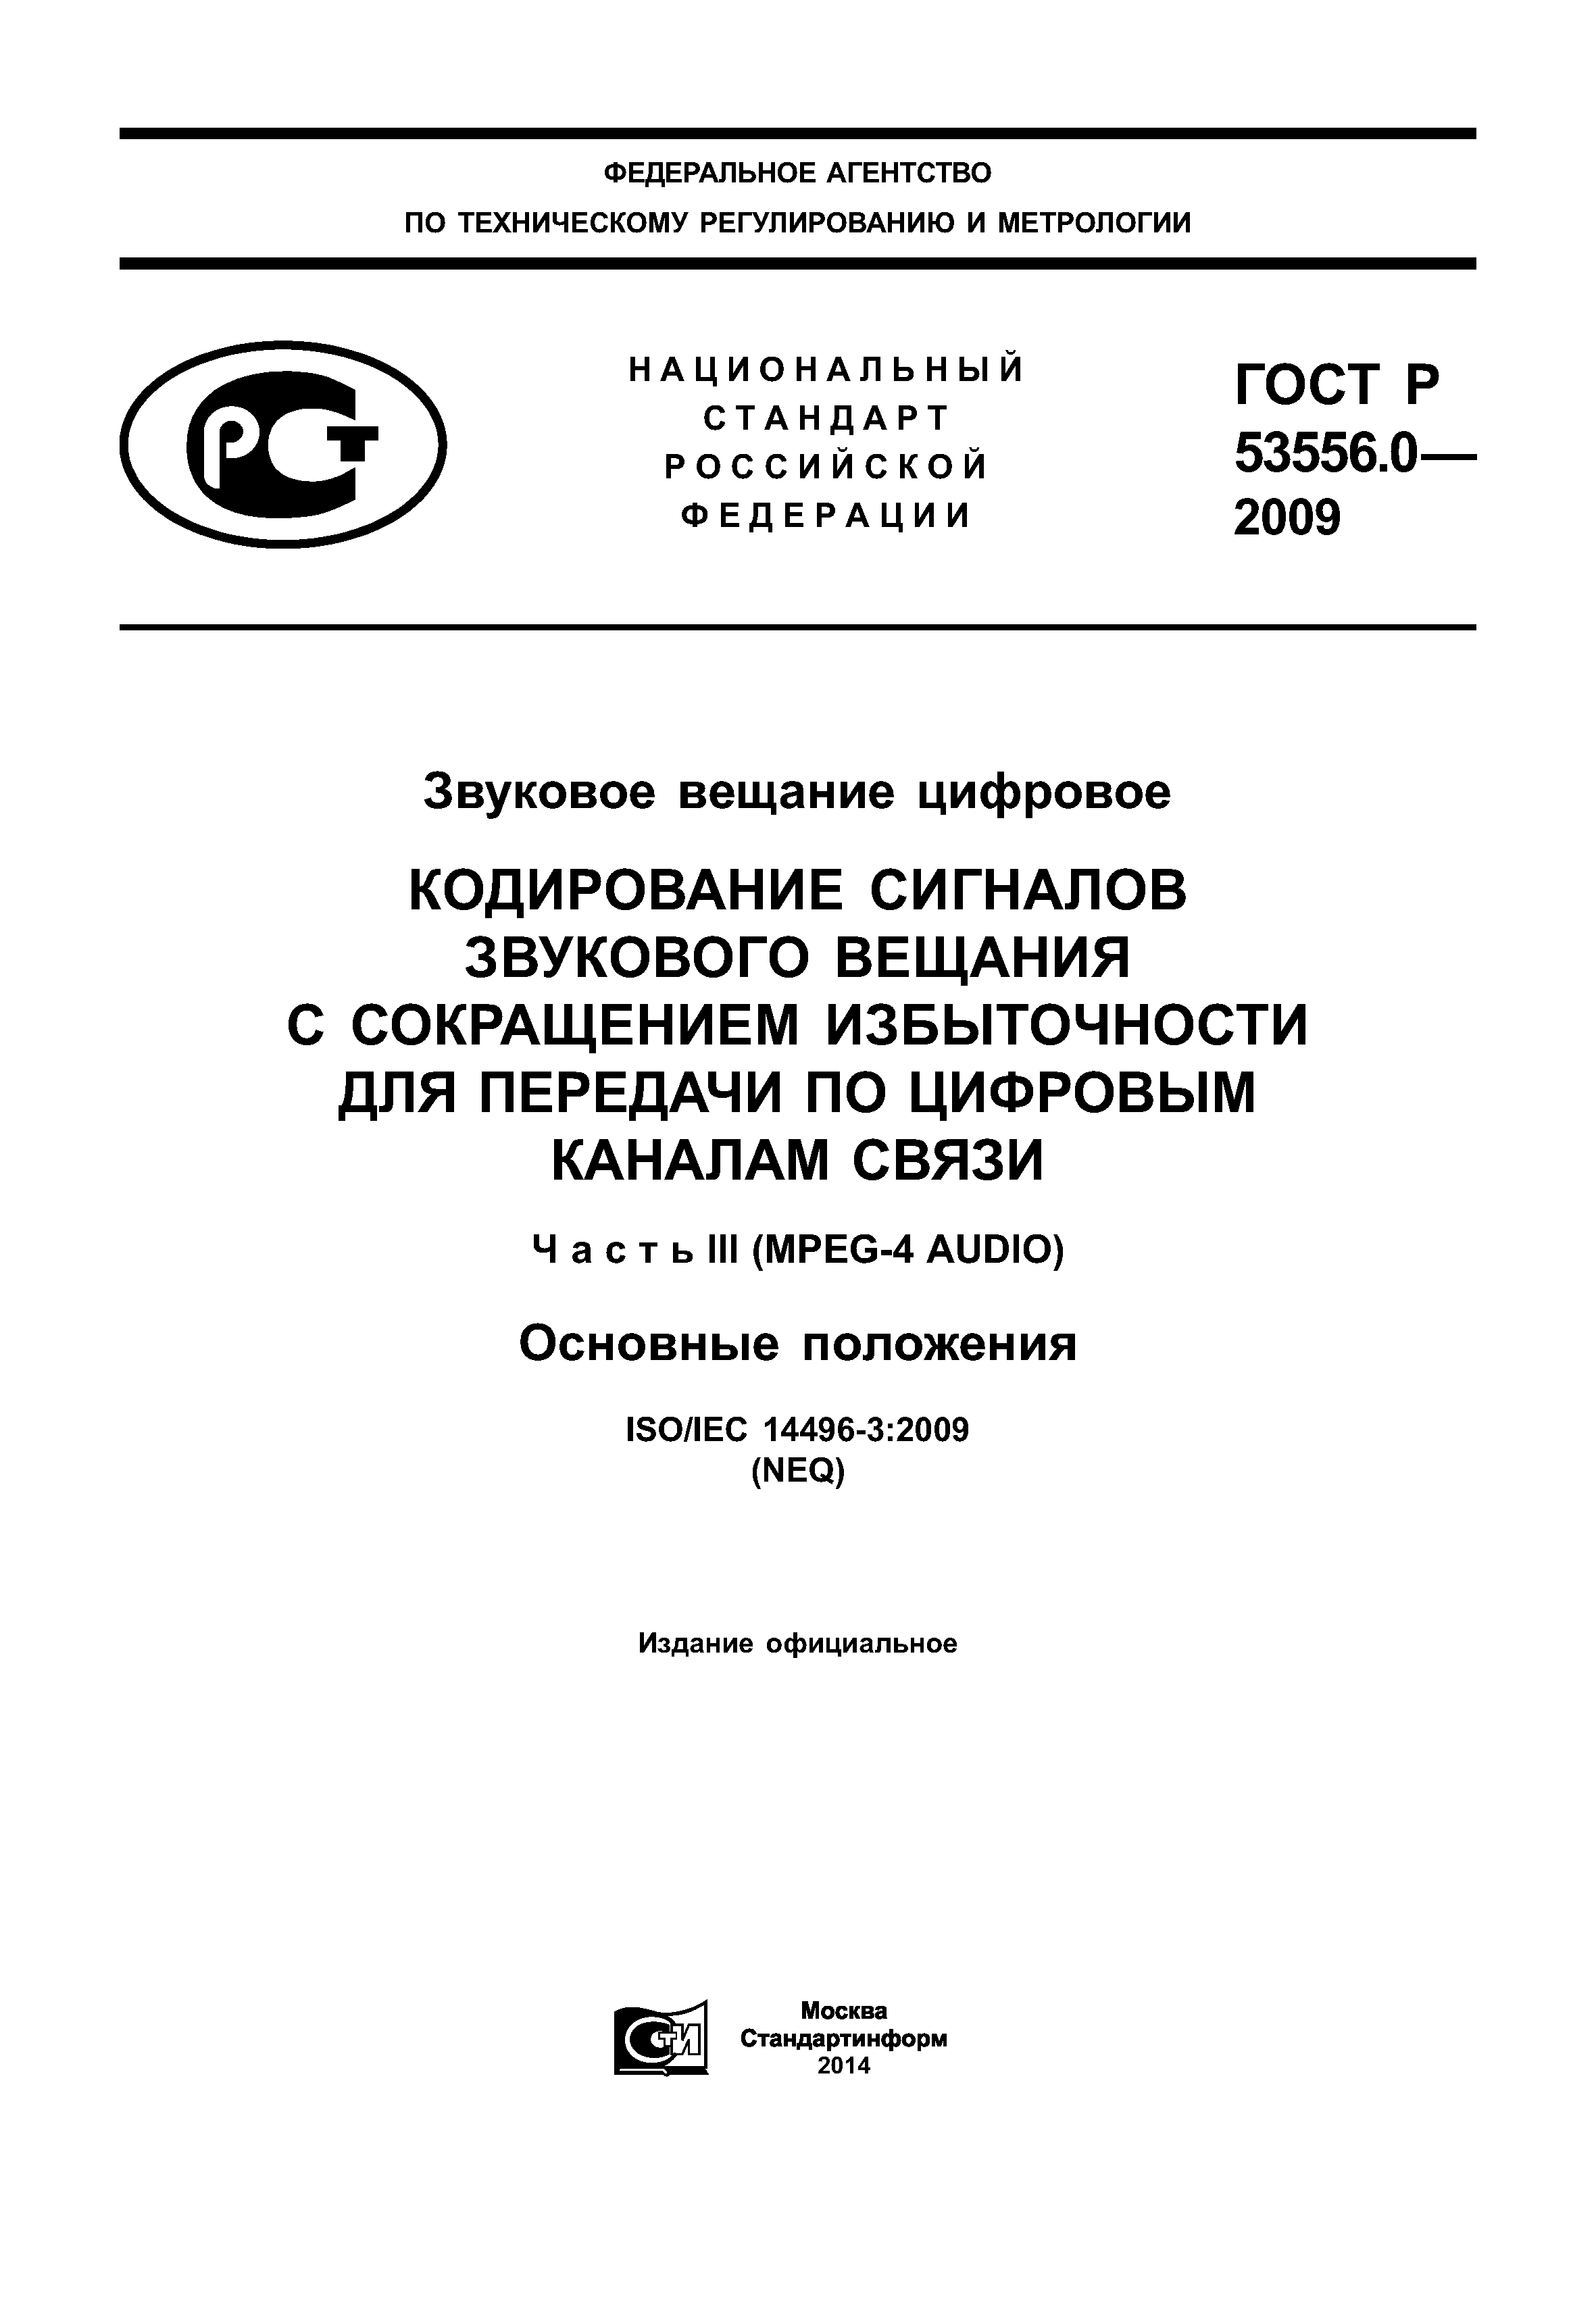 ГОСТ Р 53556.0-2009